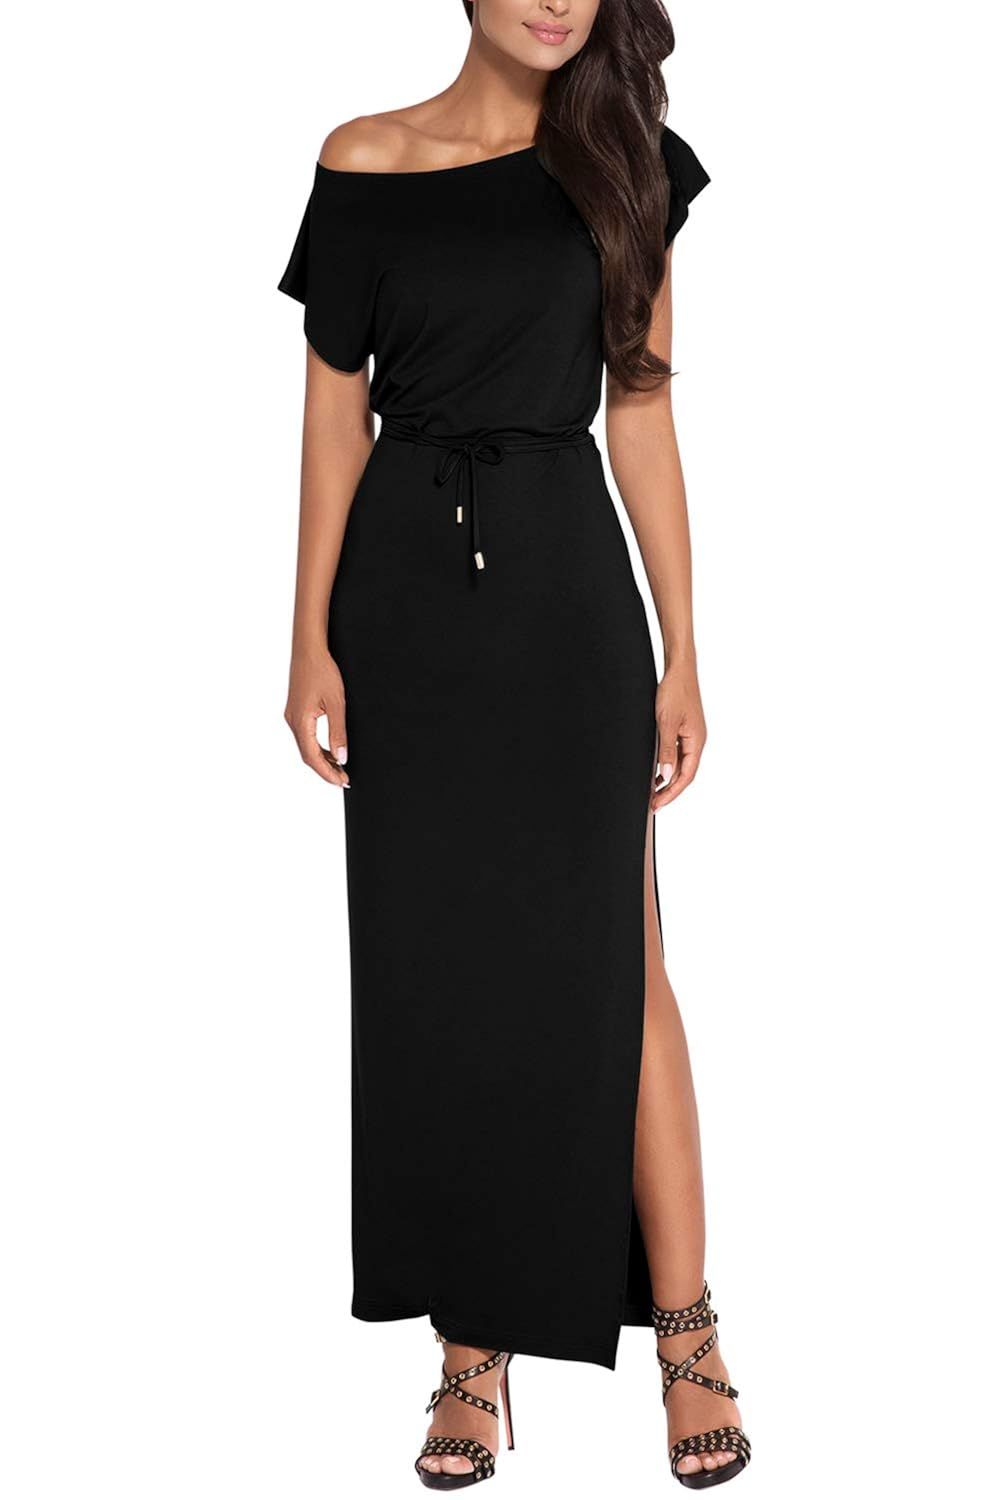 Meenew Women's Casual Short Sleeve Off Shoulder Cotton Side Slit Maxi Dress | Amazon (US)